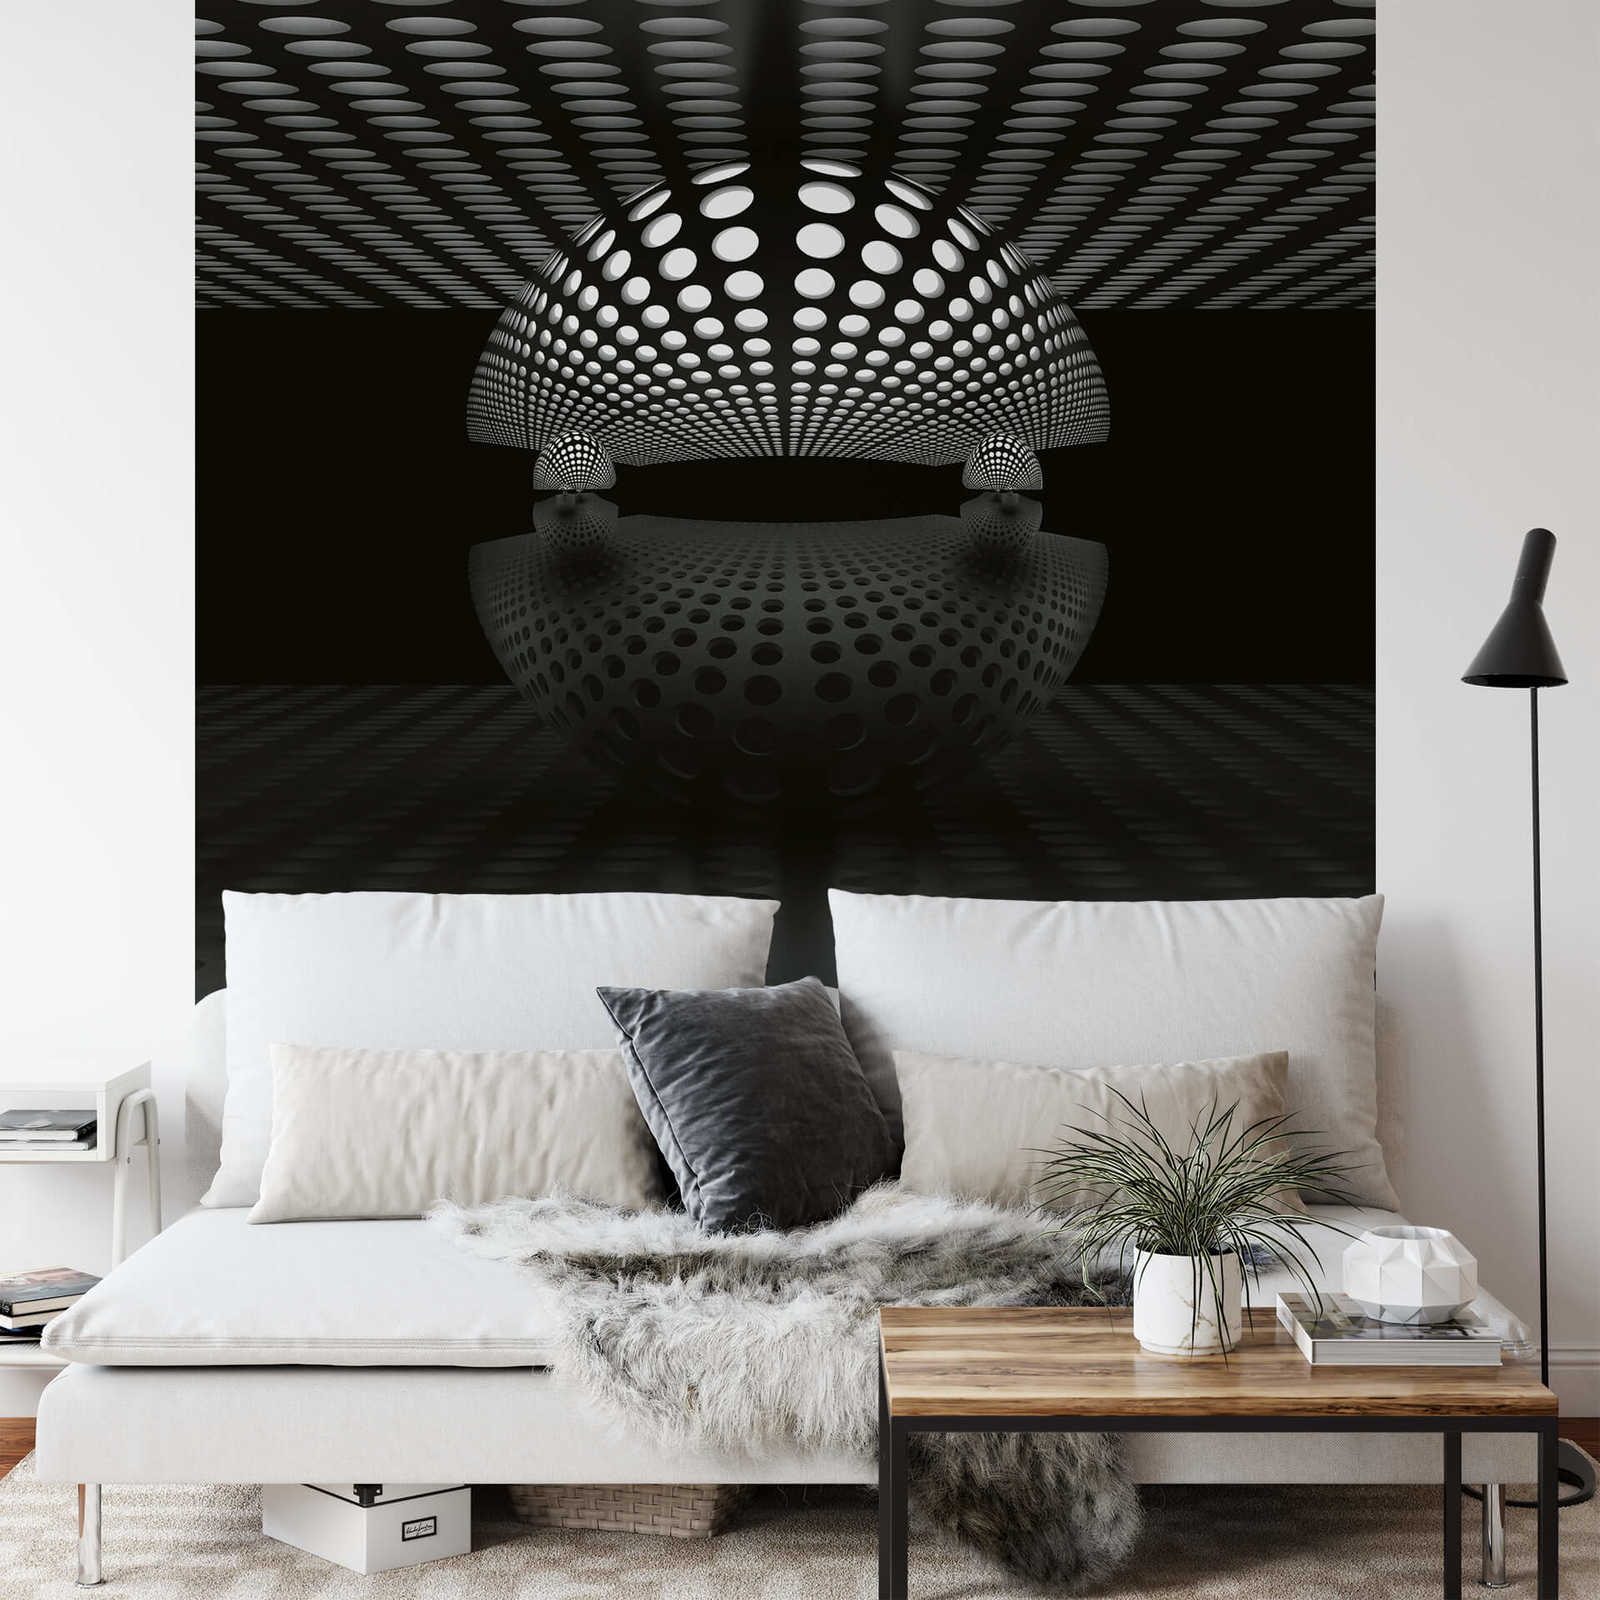             Fototapete abstrakt 3D Kugel – Schwarz, Grau, Weiß
        